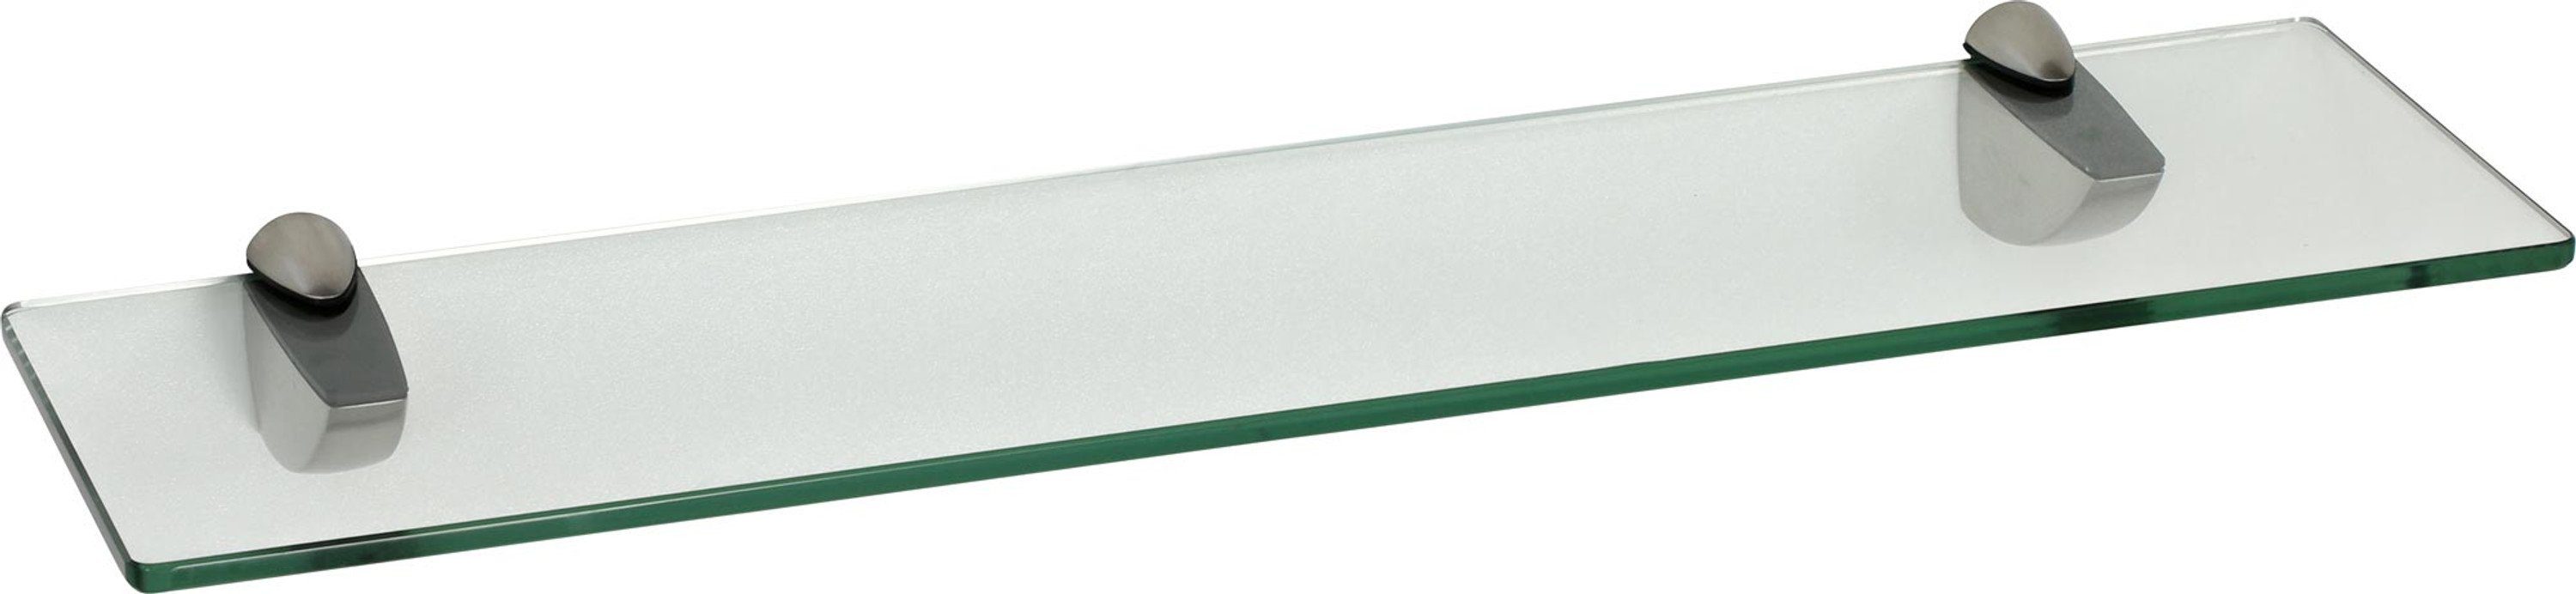 ib style Wandregal Glasregal 10mm klar 40 x 15 cm + Clip PELI Edelstahloptik, Glasboden aus ESG-Sicherheitsglas - Wandregal